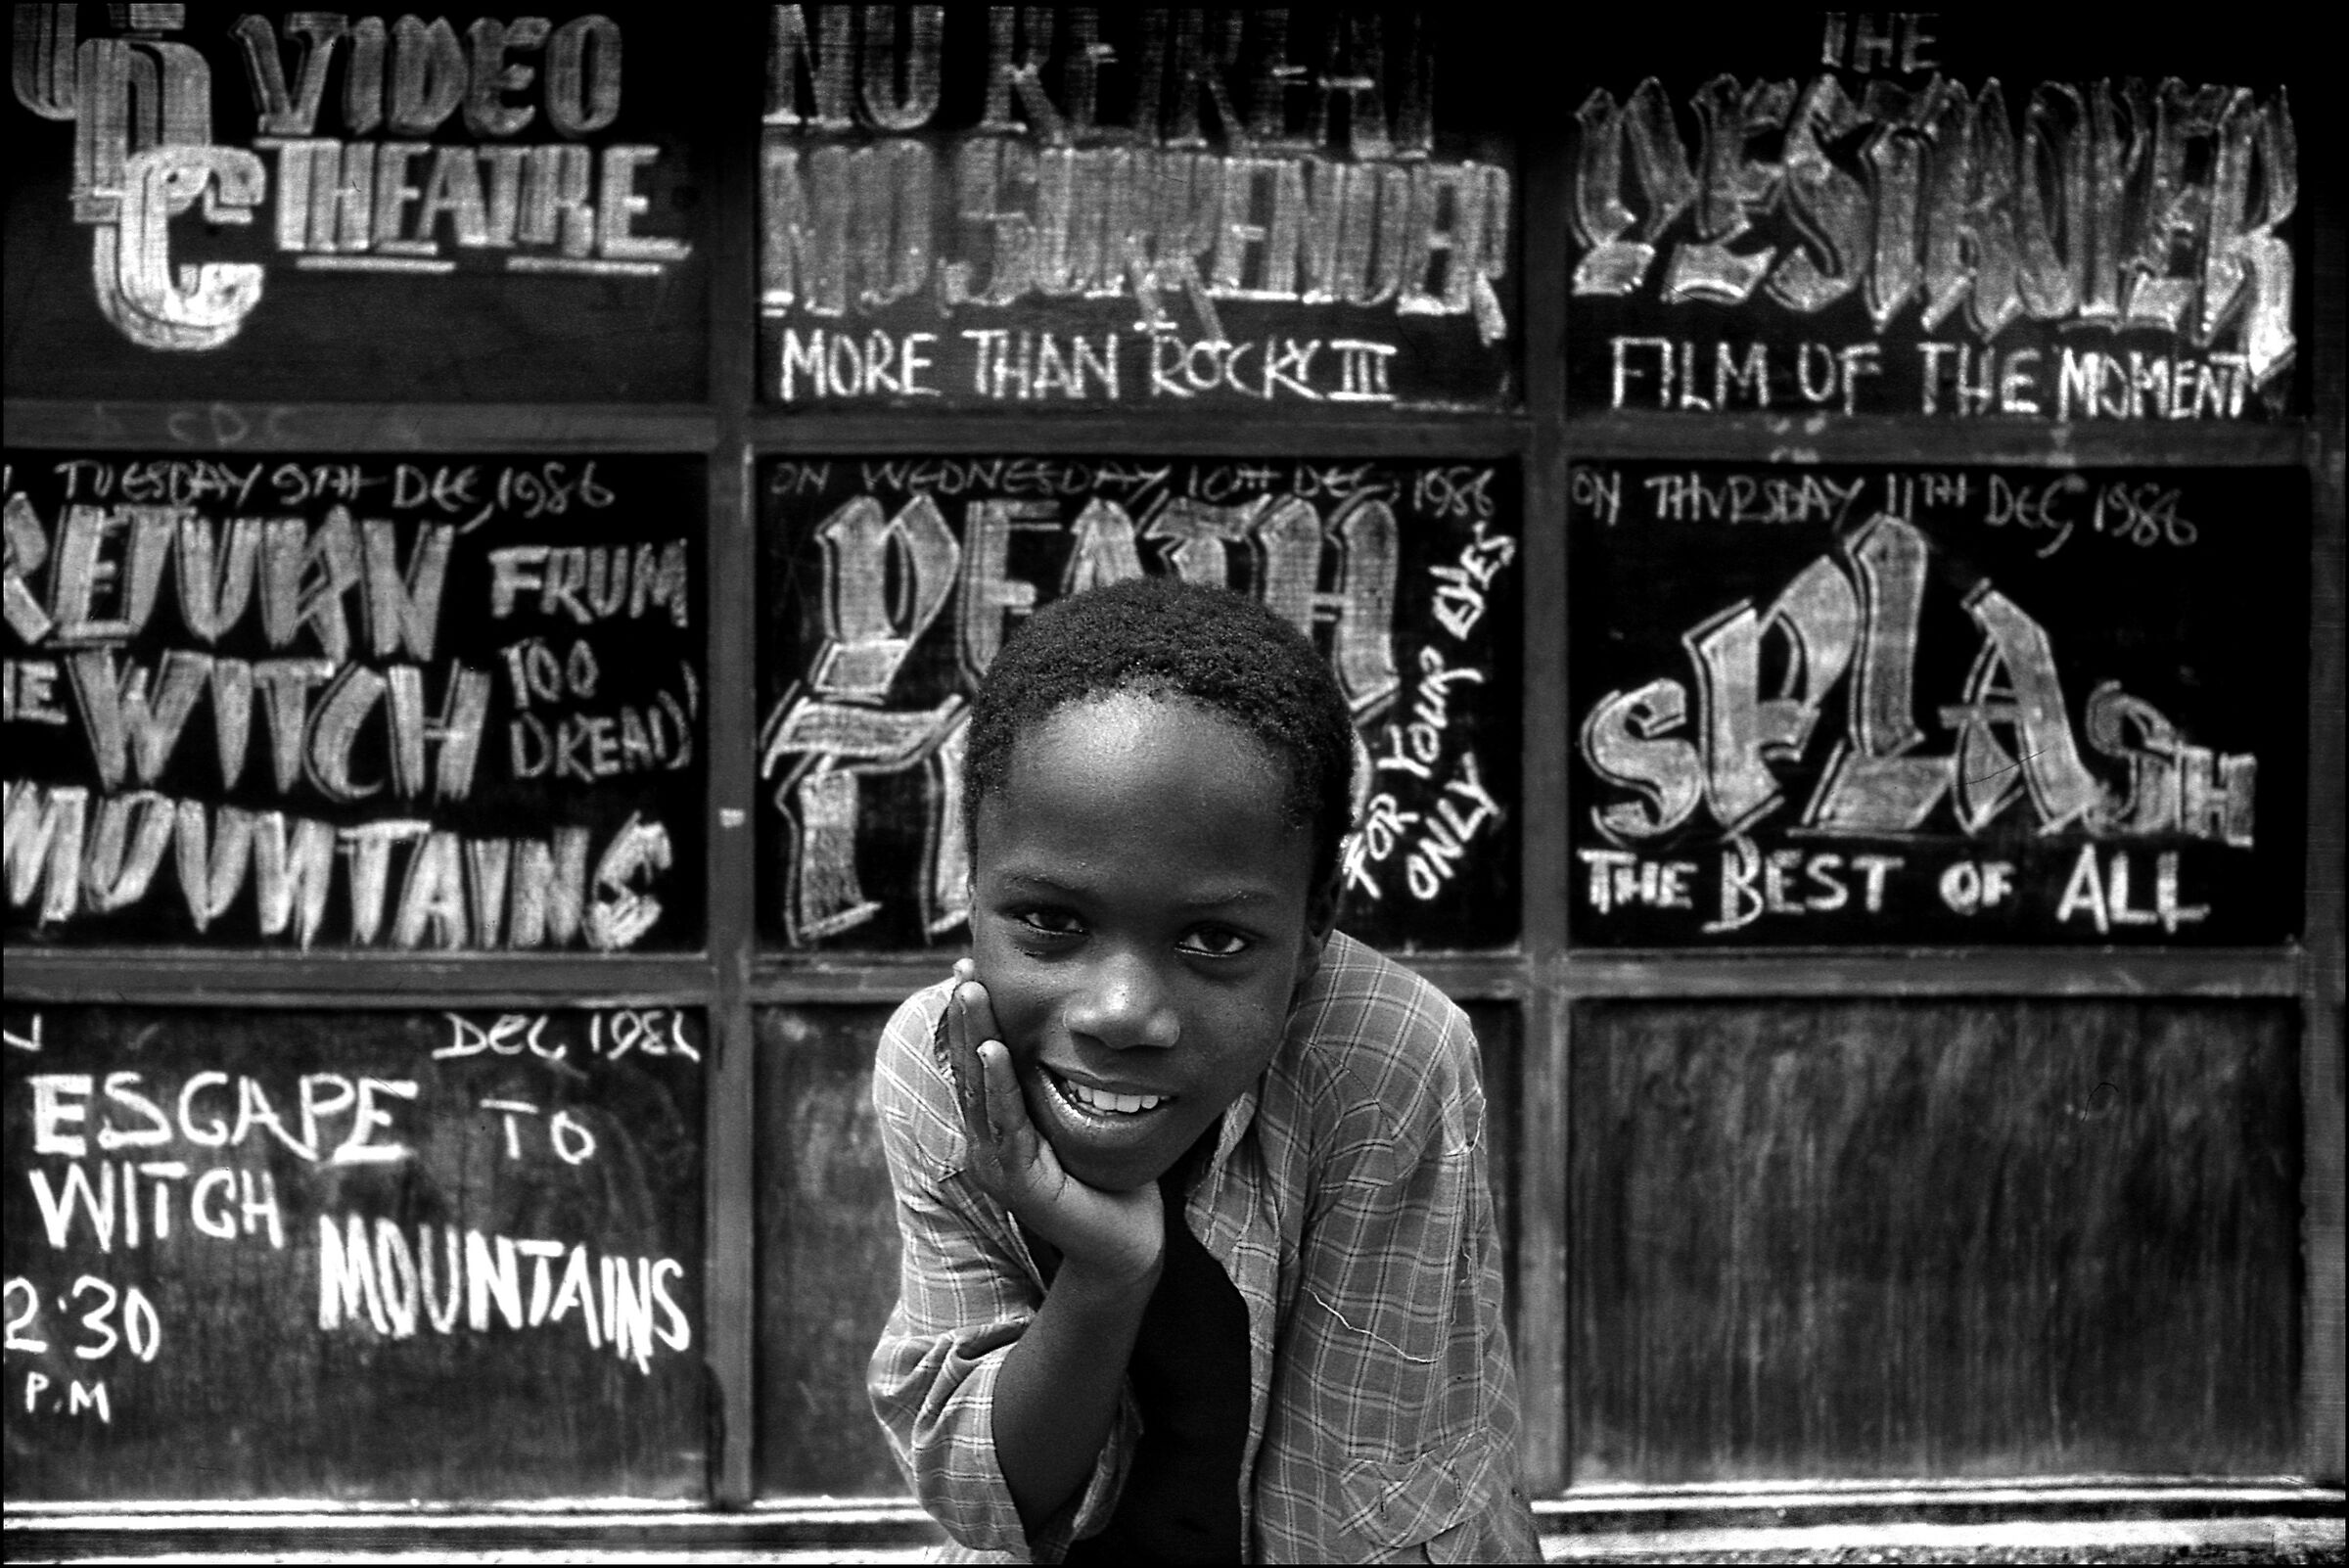 1986 - Burkina Faso "at the cinema"...